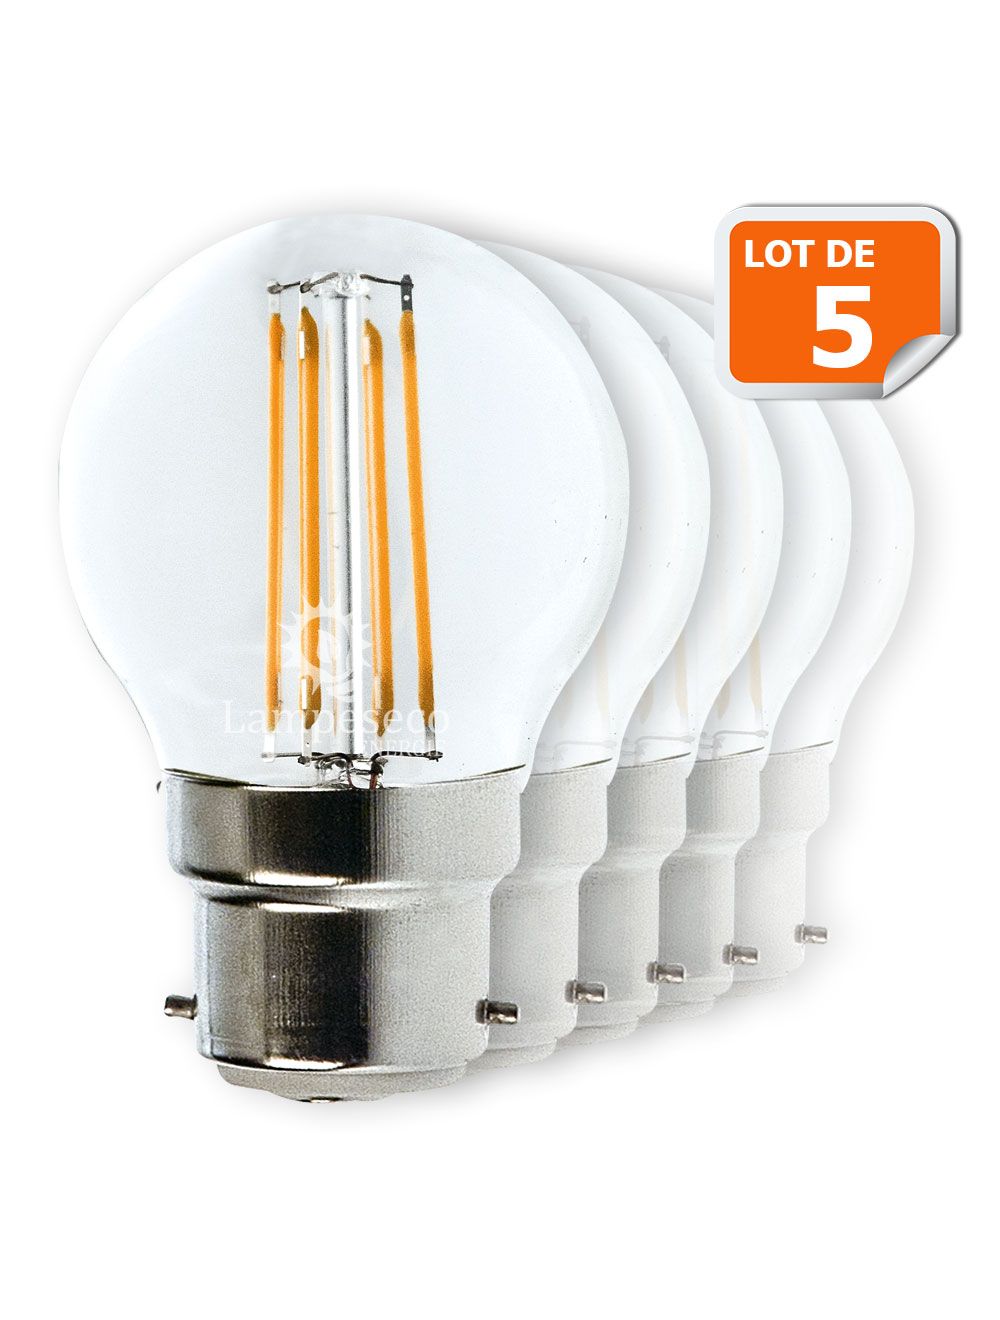 Lot de 5 Ampoules Led Filament Culot B22 forme G45 4 Watt (éq 42 watts)  Blanc Chaud